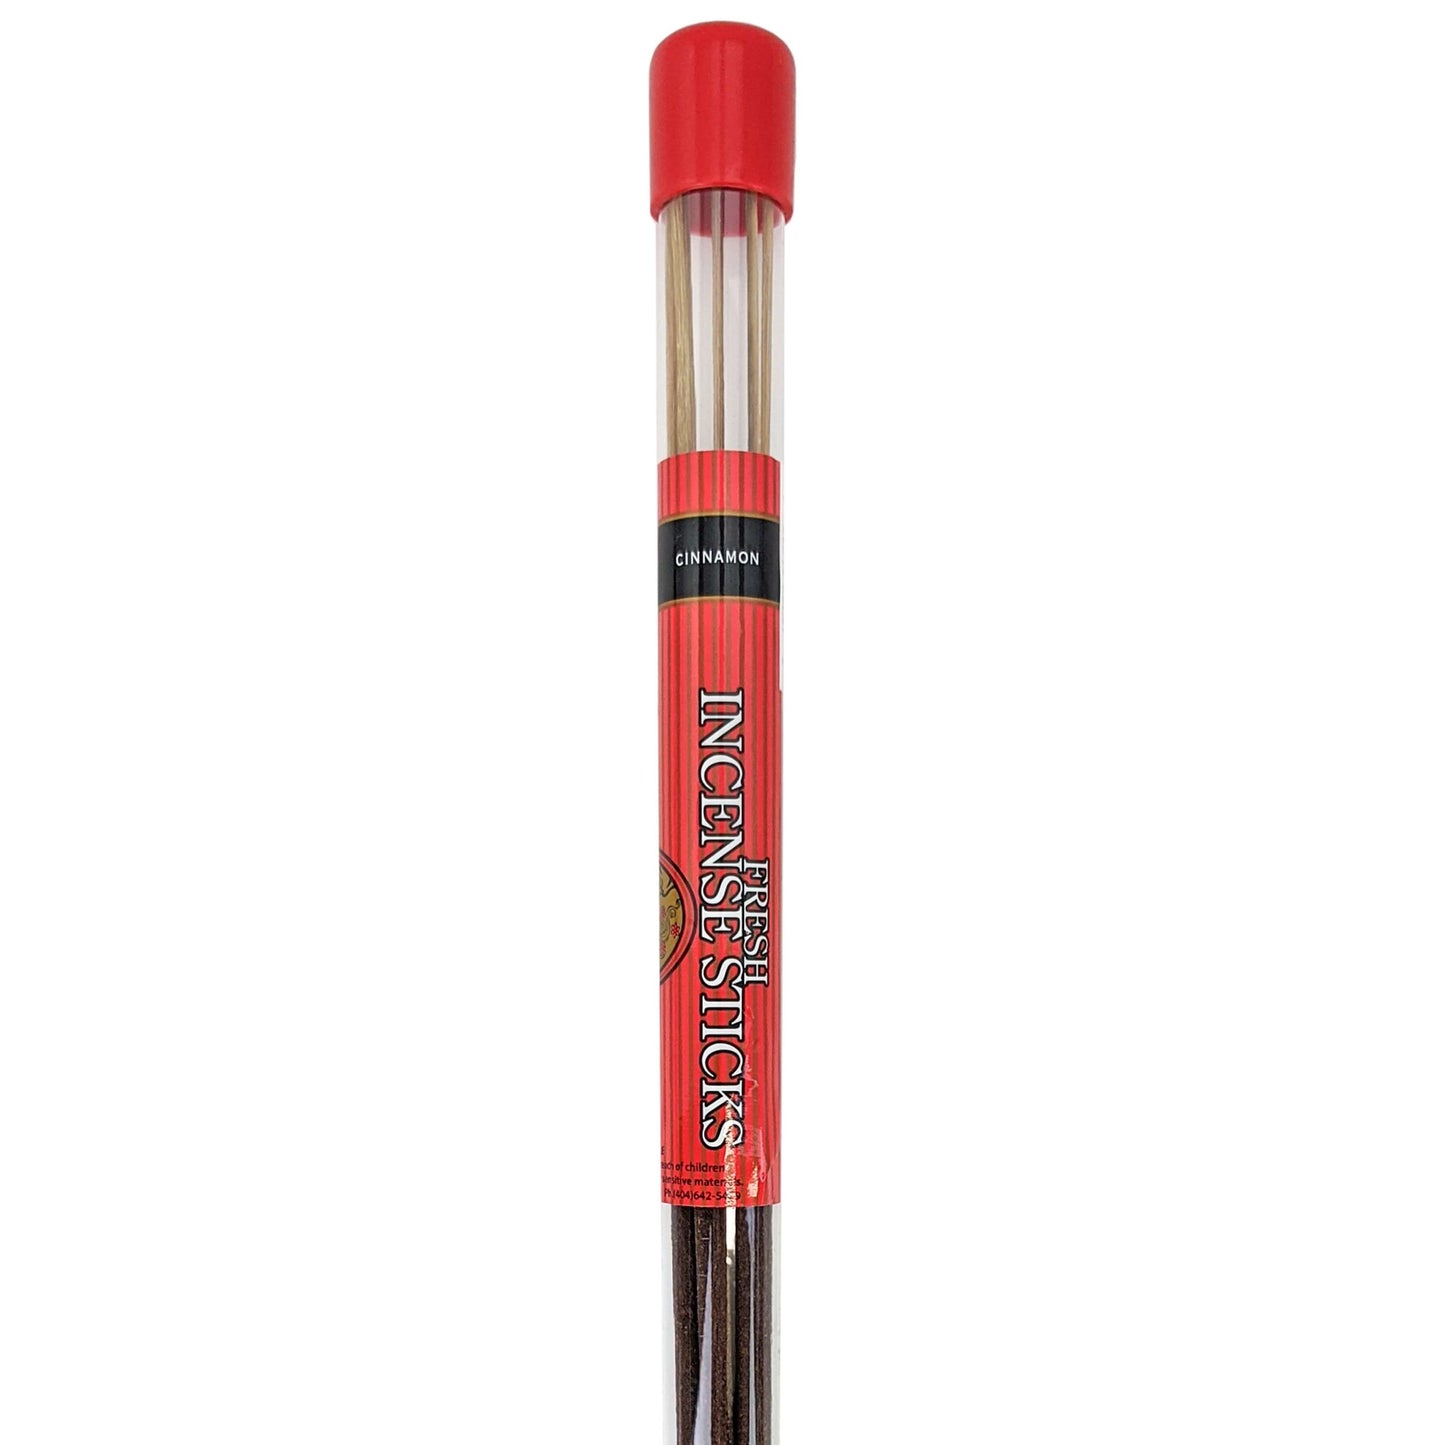 Cinnamon Scent Blunt Power 17" Incense Sticks, 5-7 Sticks